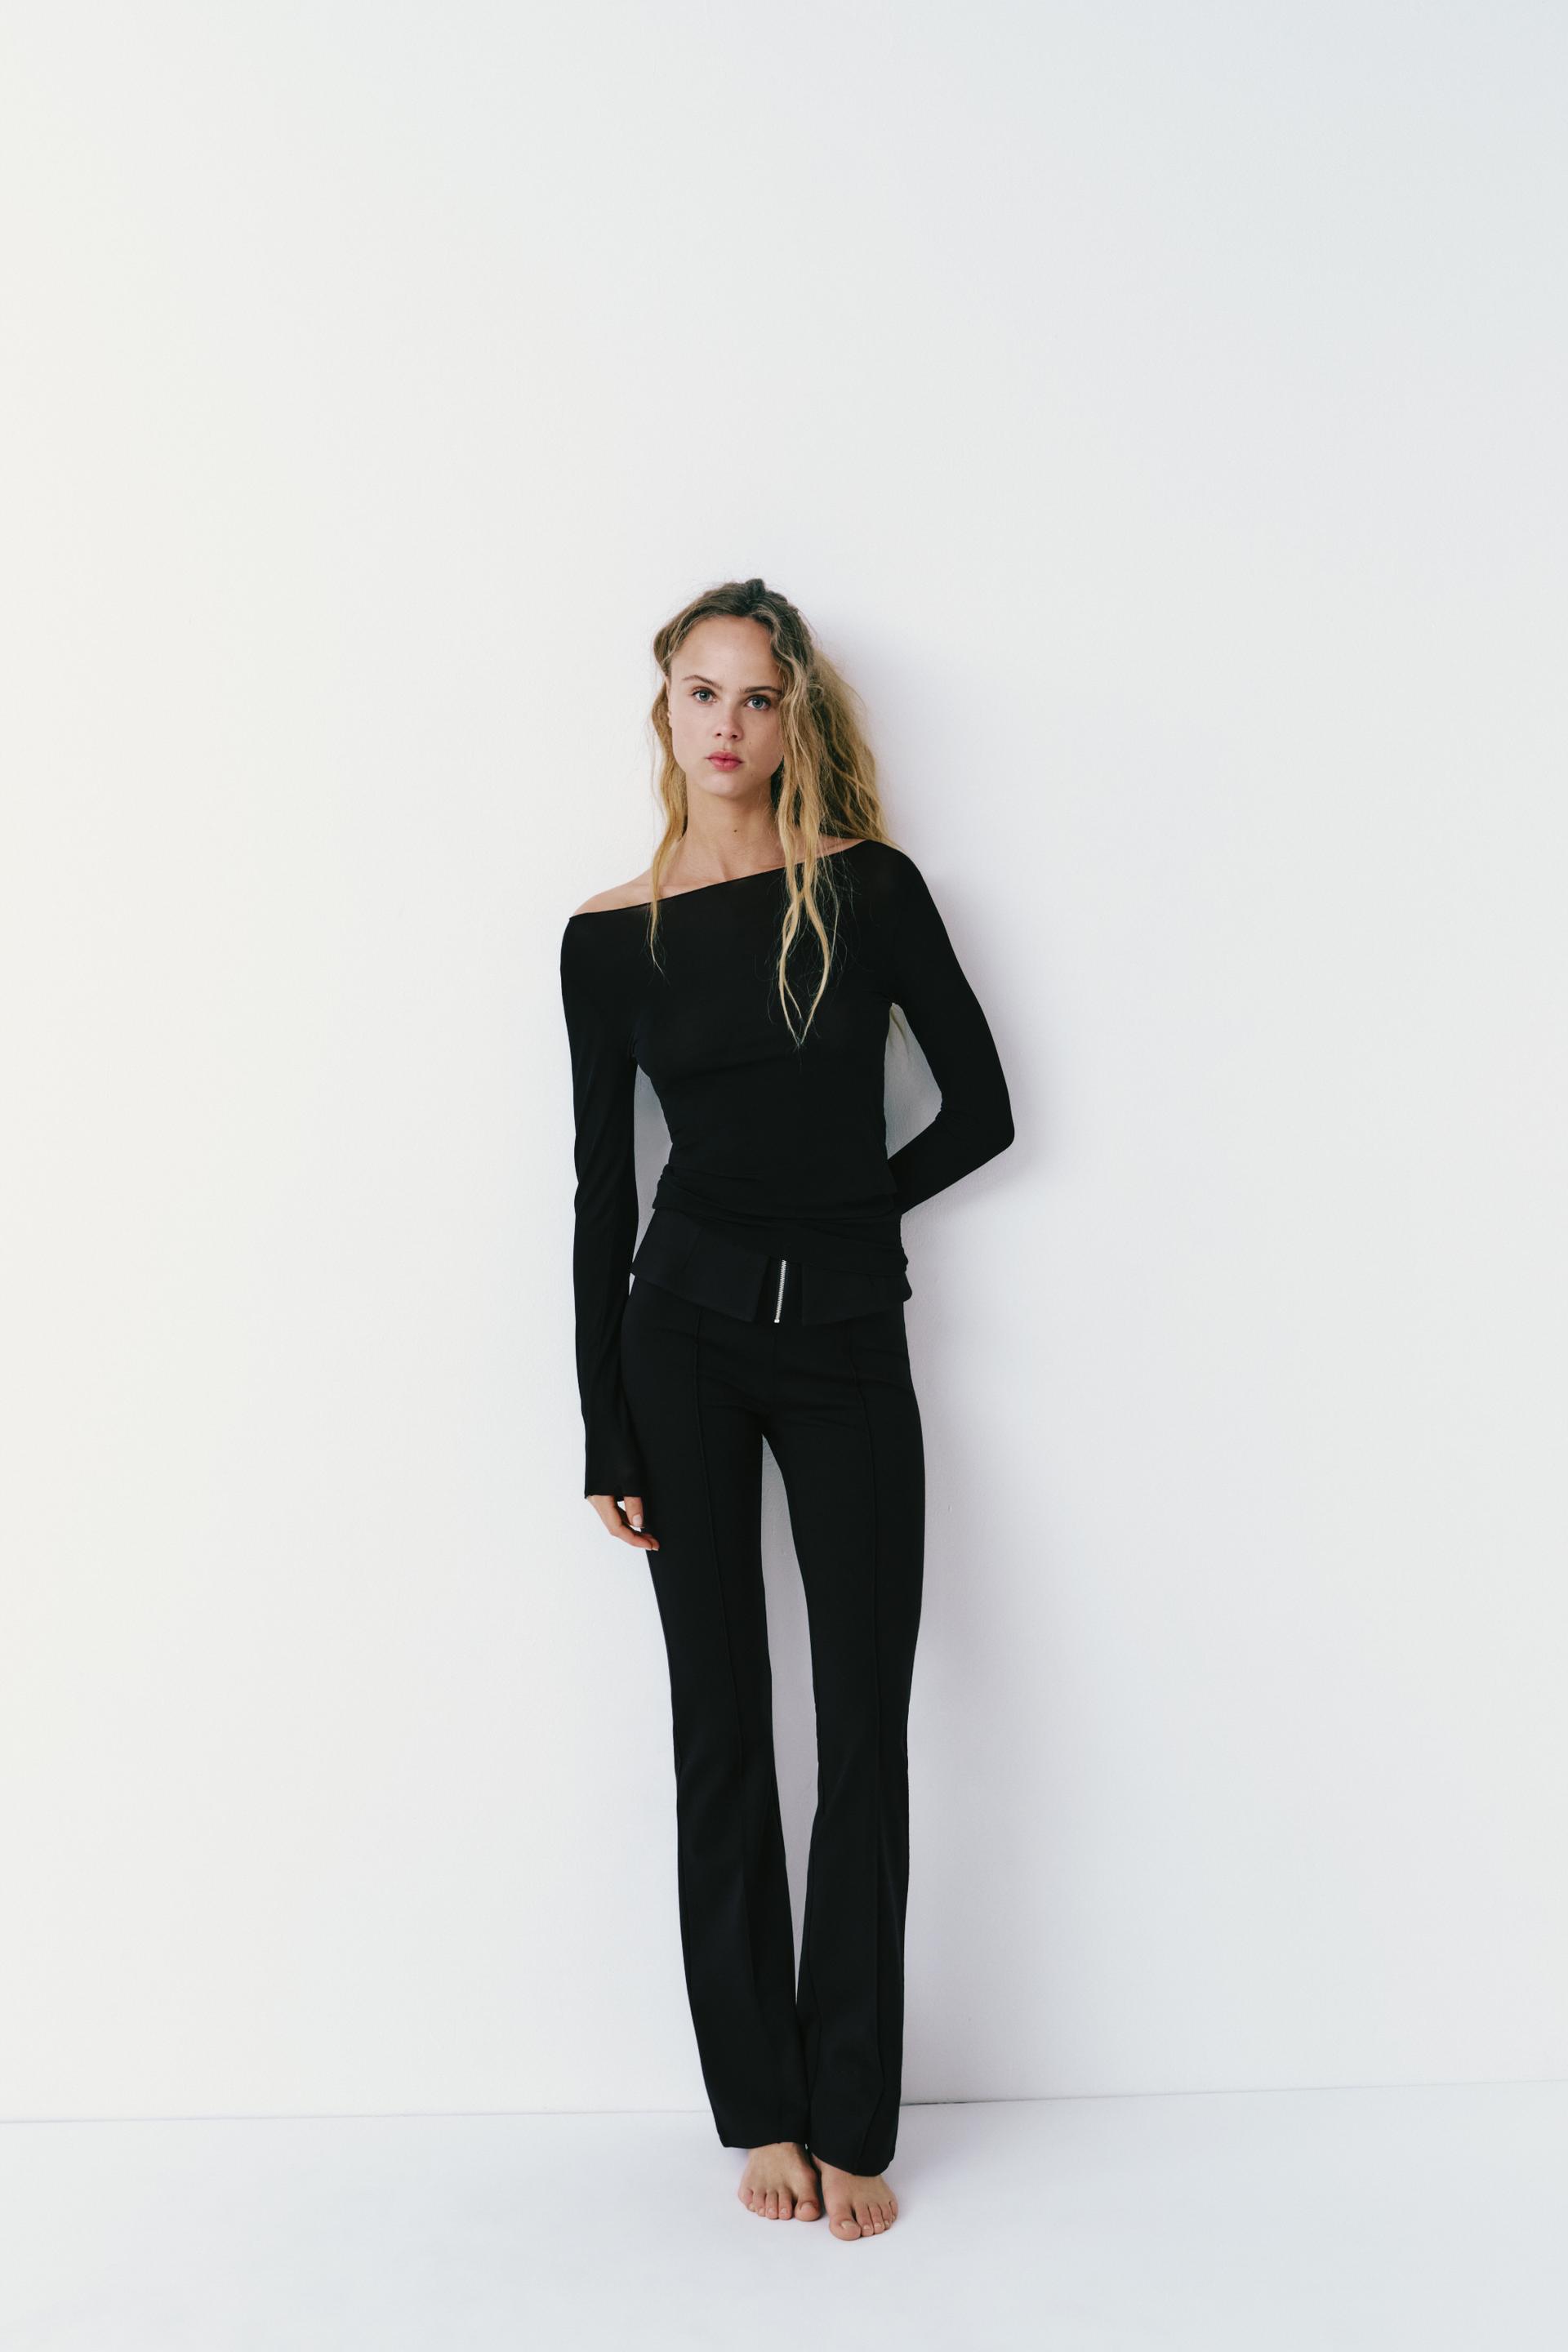 Zara-TEXTURED PAREO PANTS-Size: 7-Color: Black-NEW!!